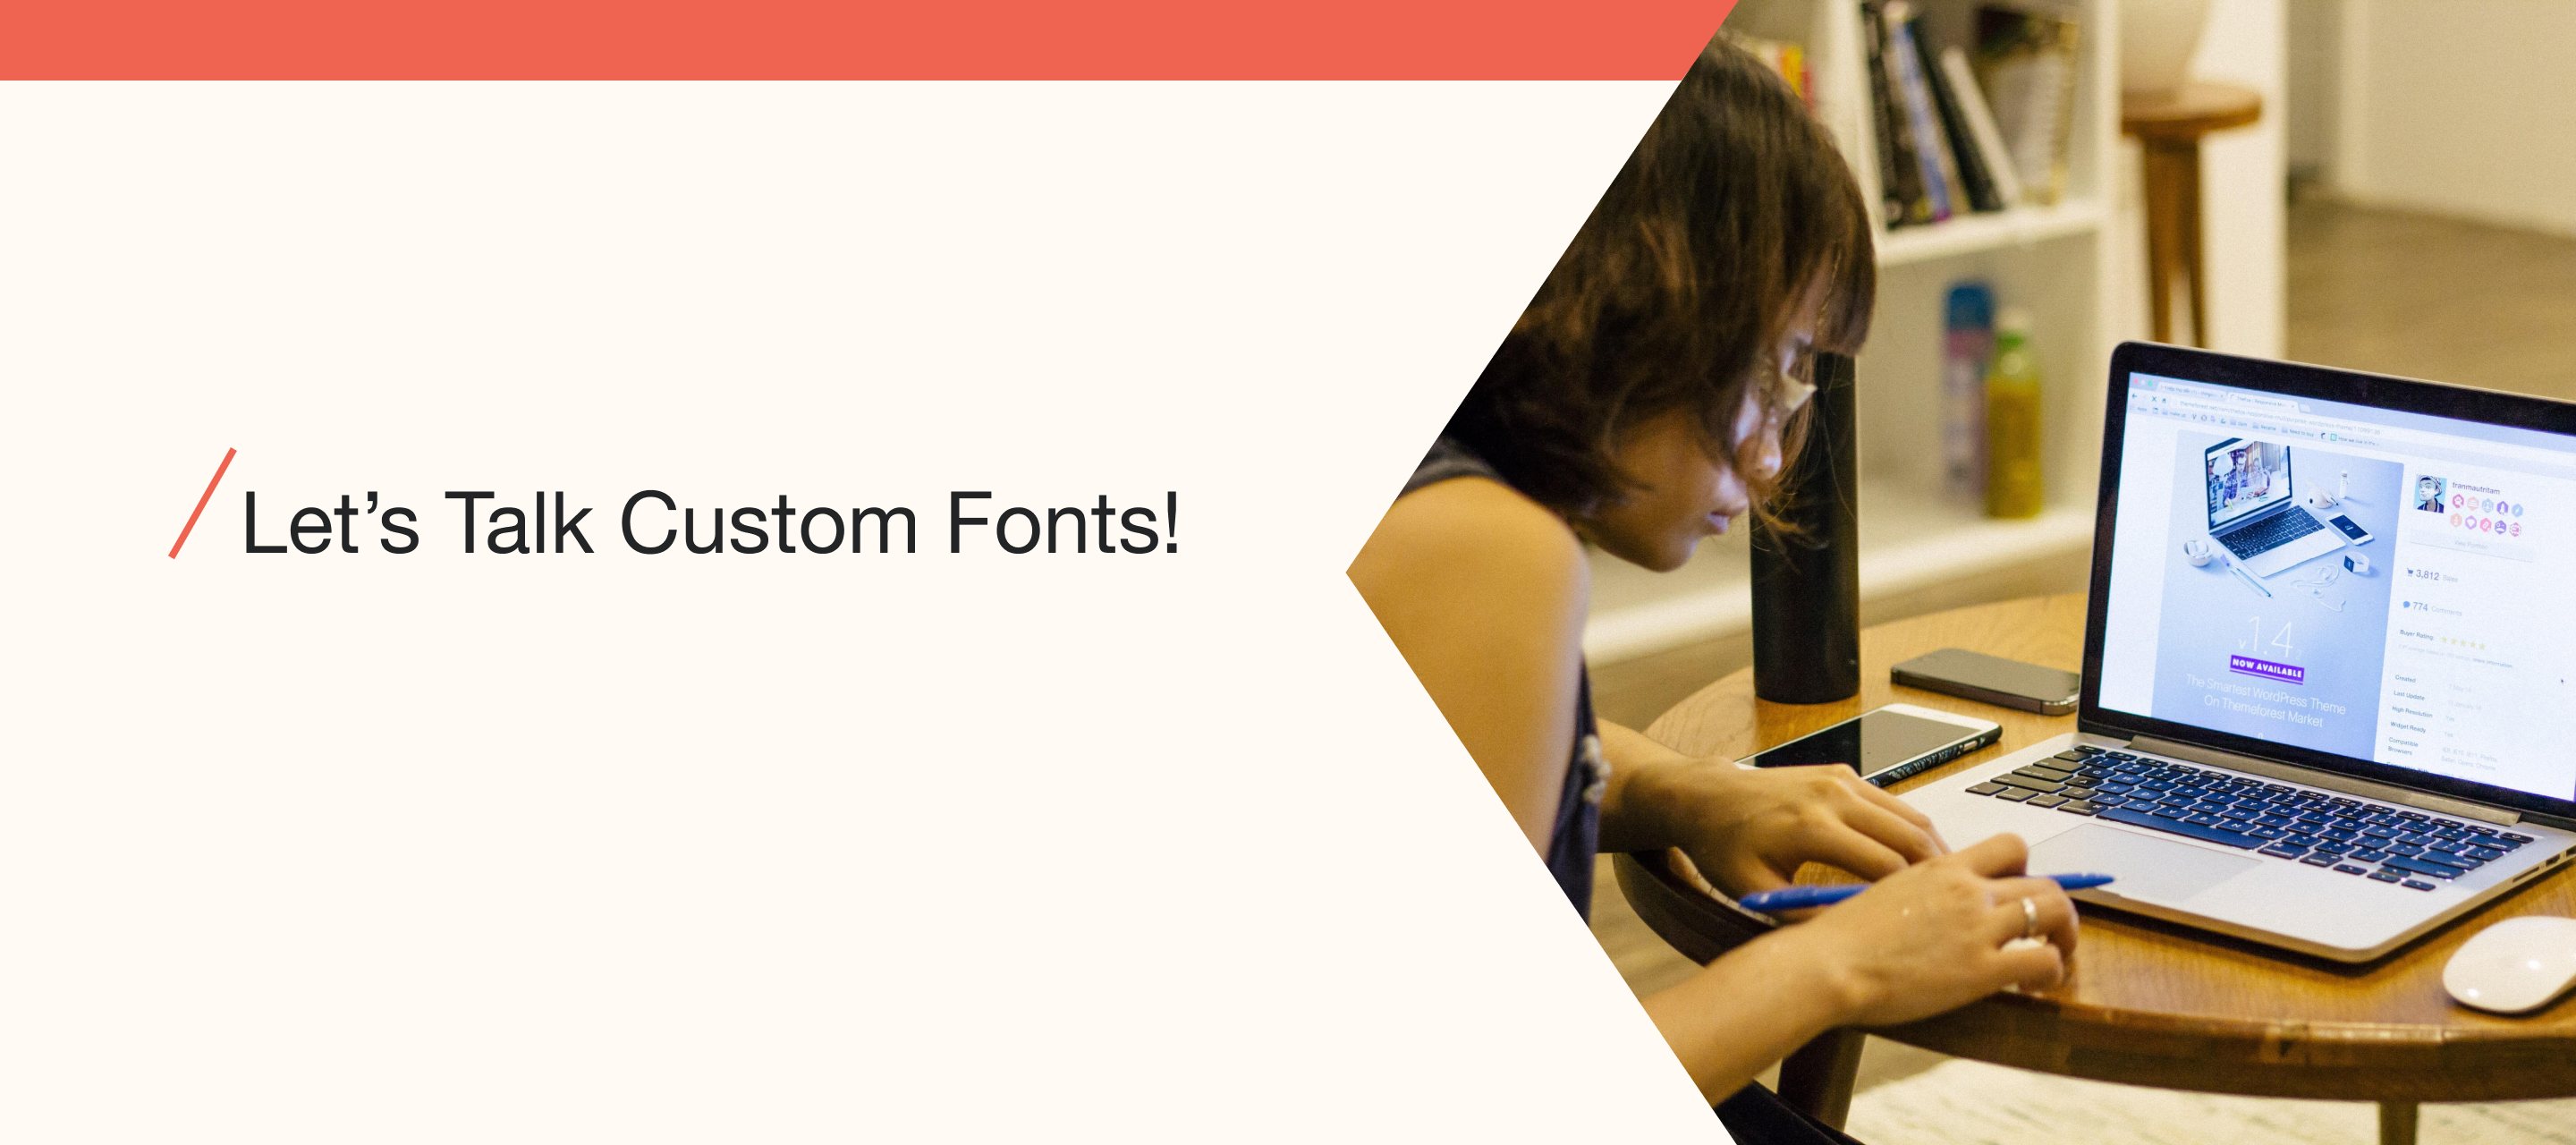 Let's Talk Custom Fonts!